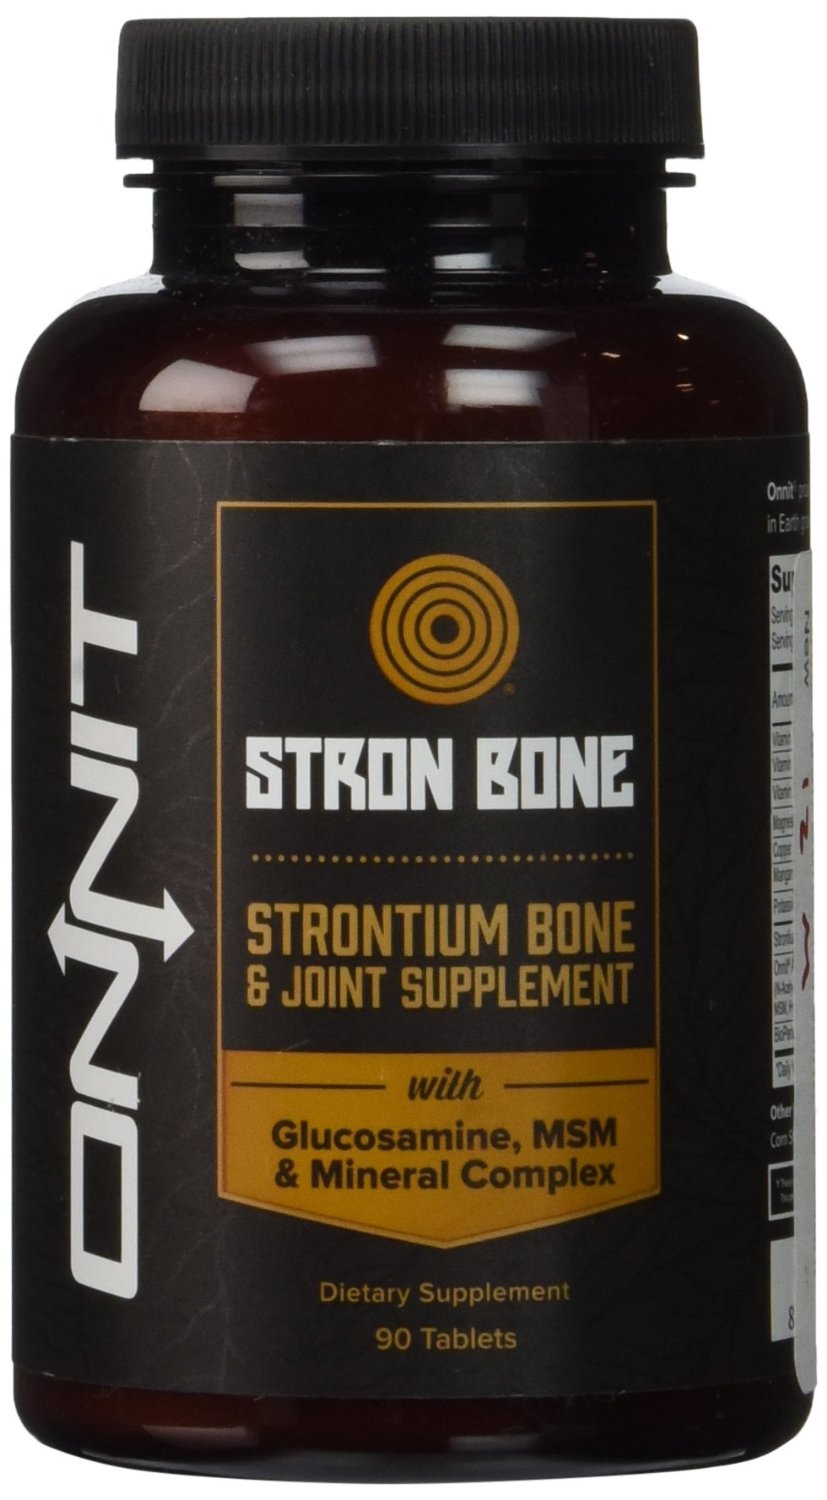 Stron Bone UK